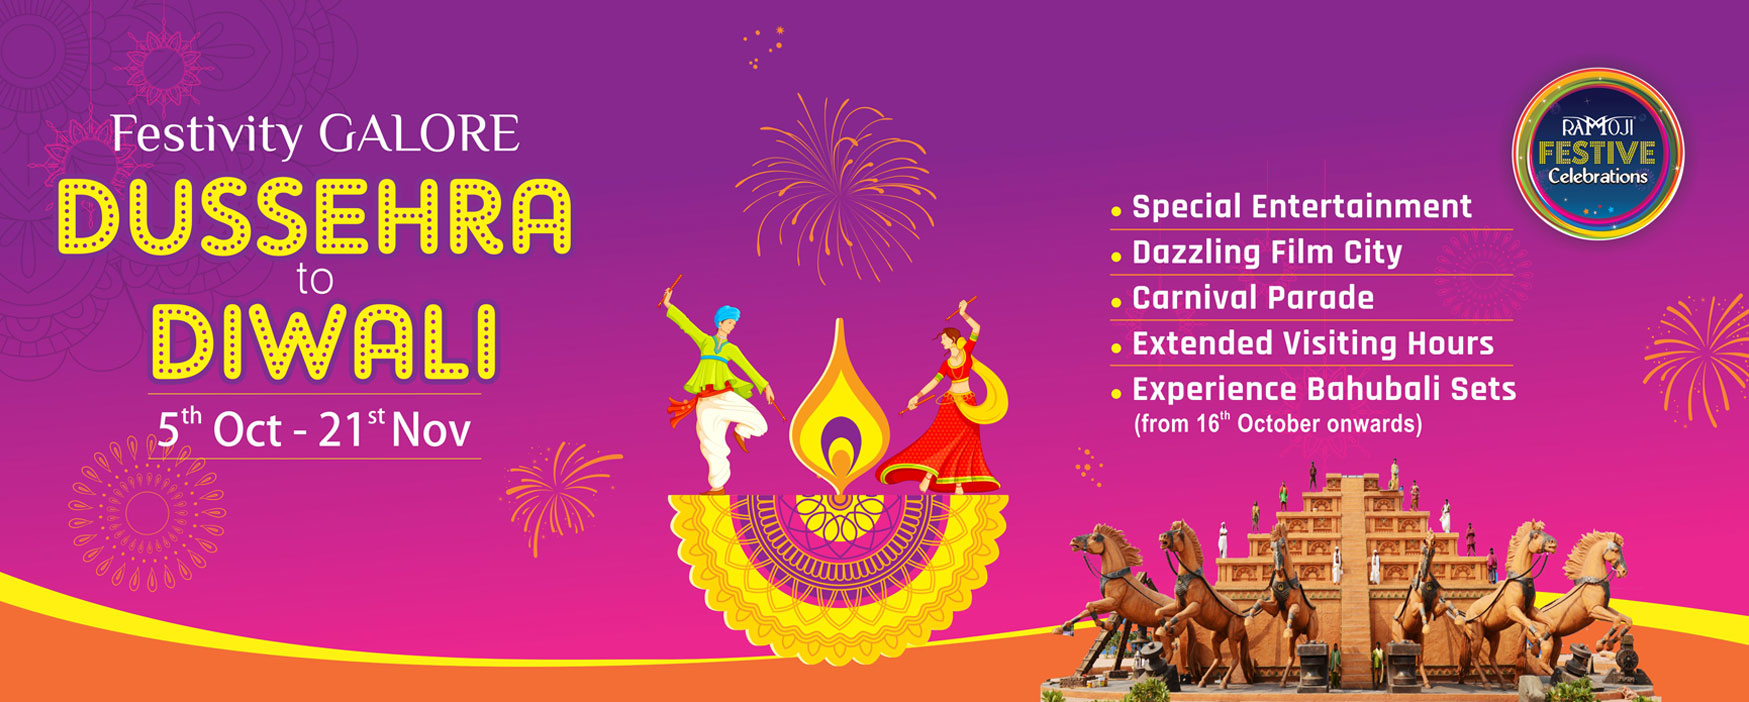 Dussehra to Diwali Celebrations at Ramoji Film City, Hyderabad, Telangana, India